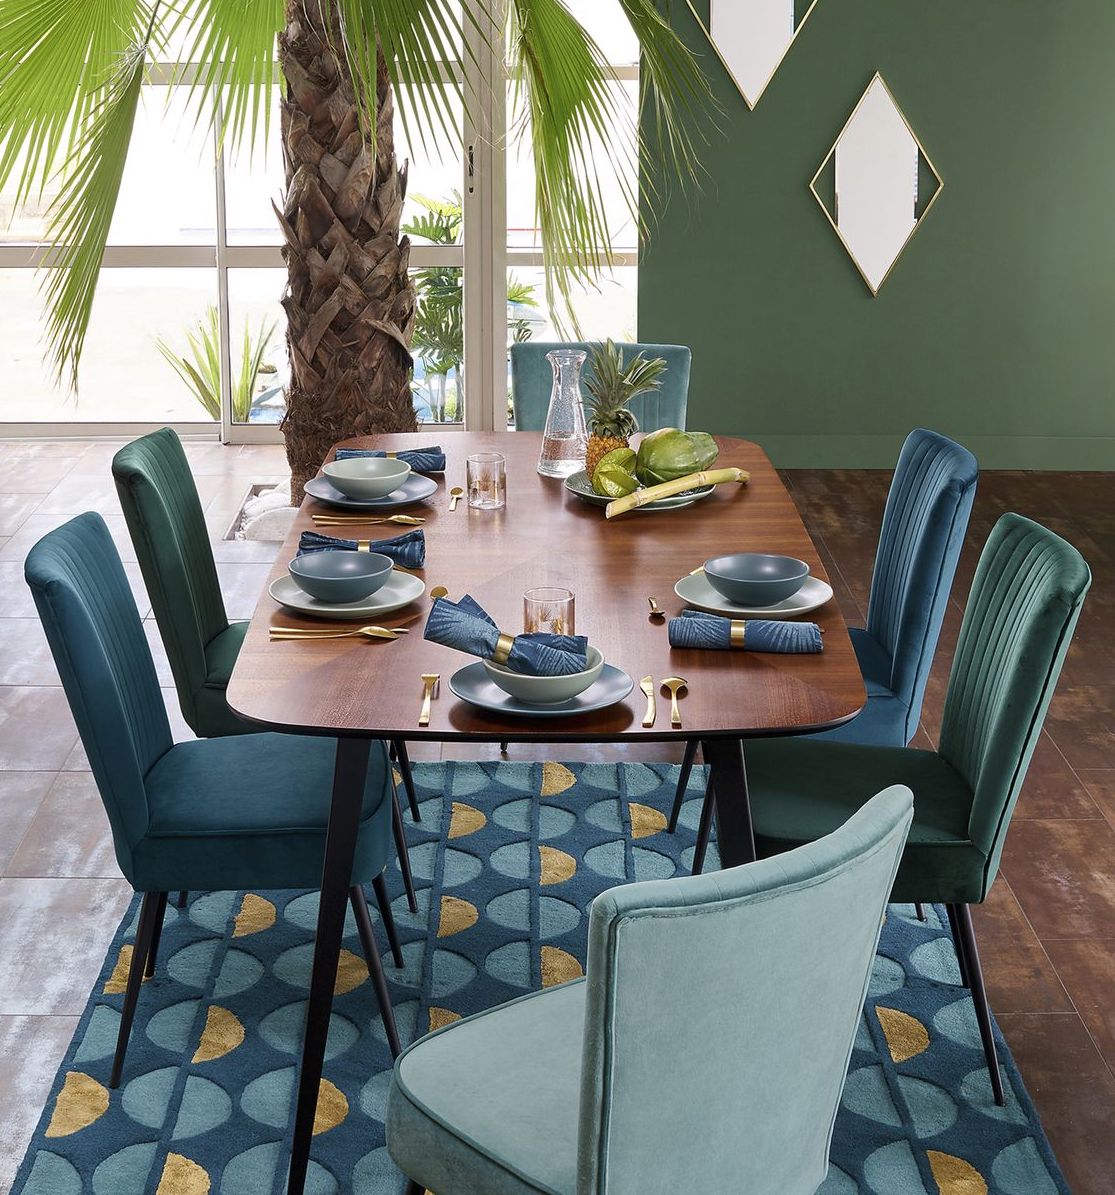 clemaroundthecorner salle à manger exotique palmier chaise bleu vert velours tapis rectangle